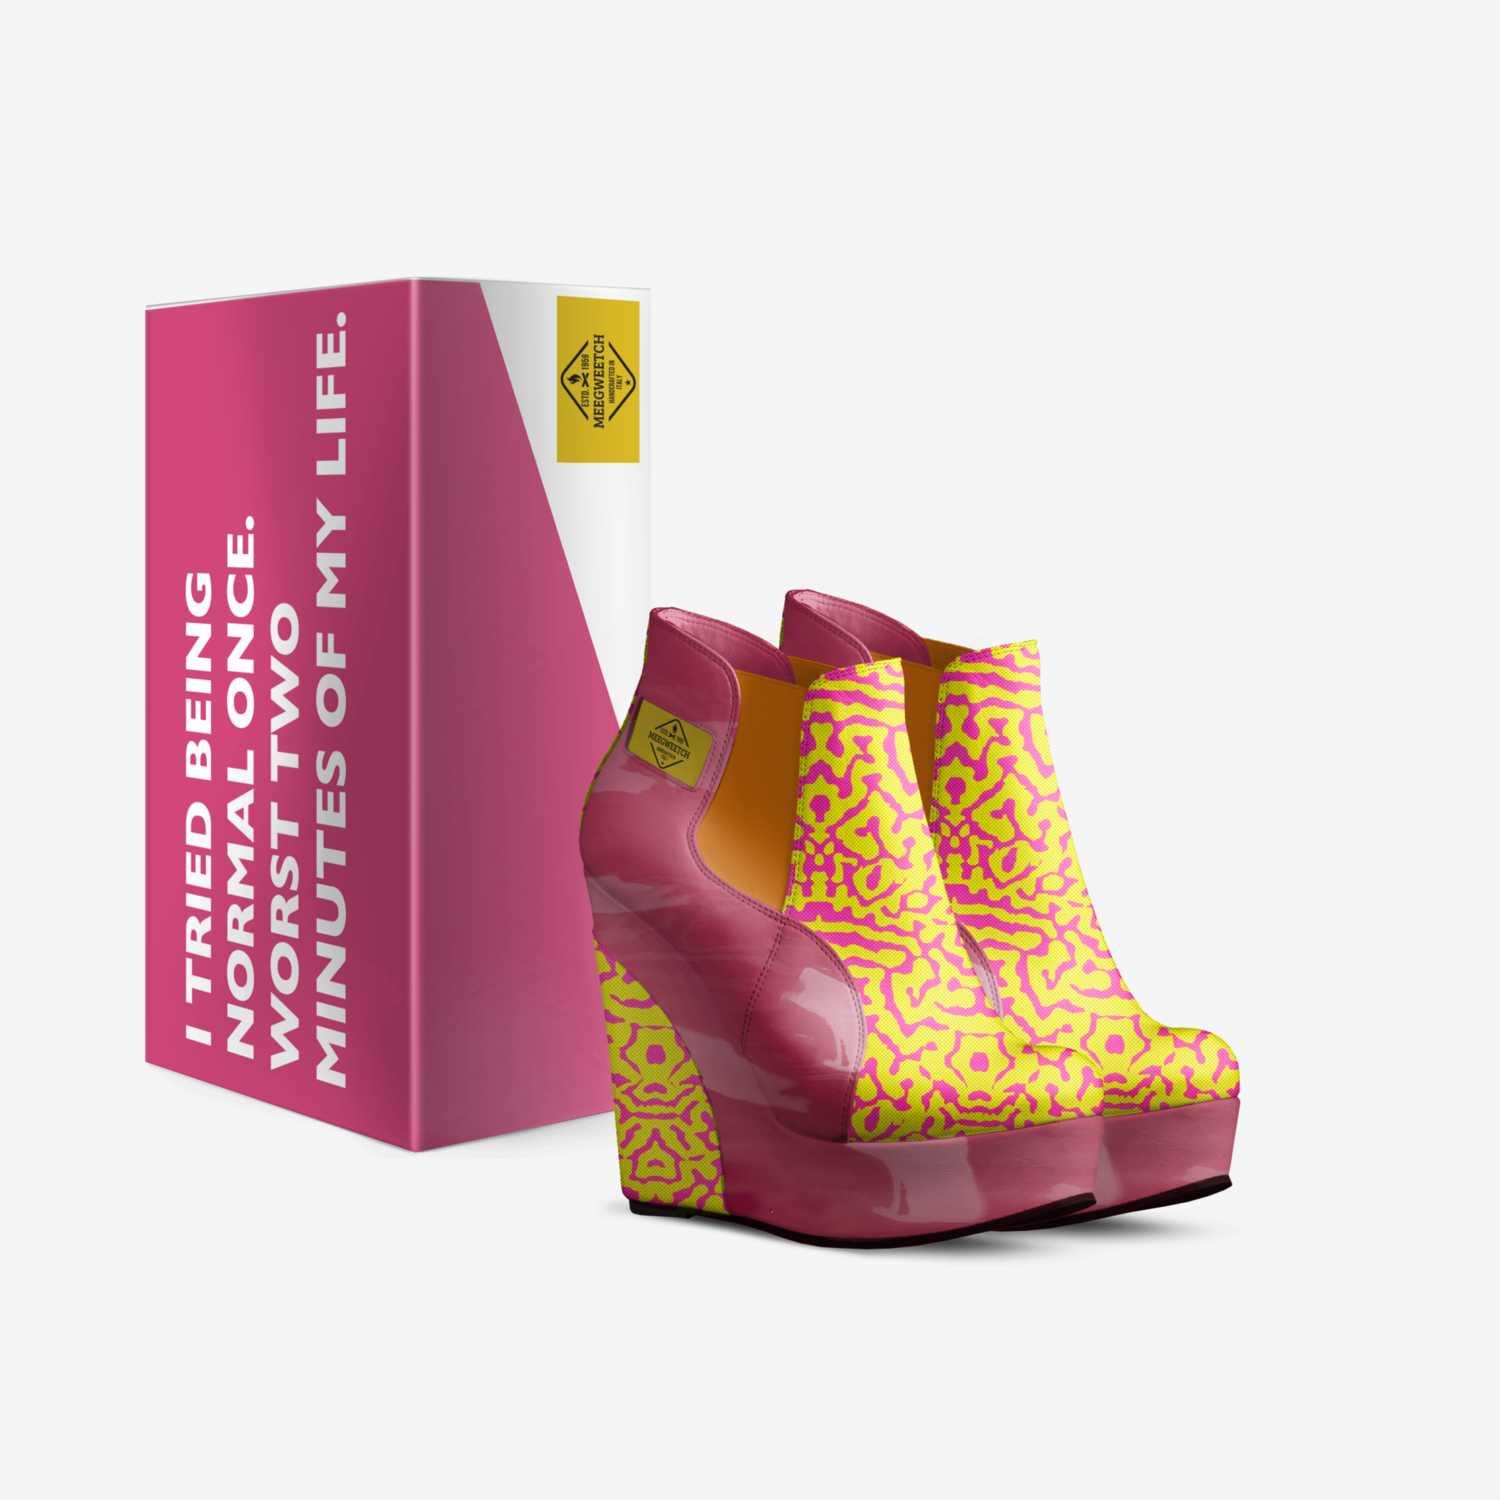 MEEGWEETCH custom made in Italy shoes by Aditi-kali Of Wonkey Donkey Bazaar | Box view